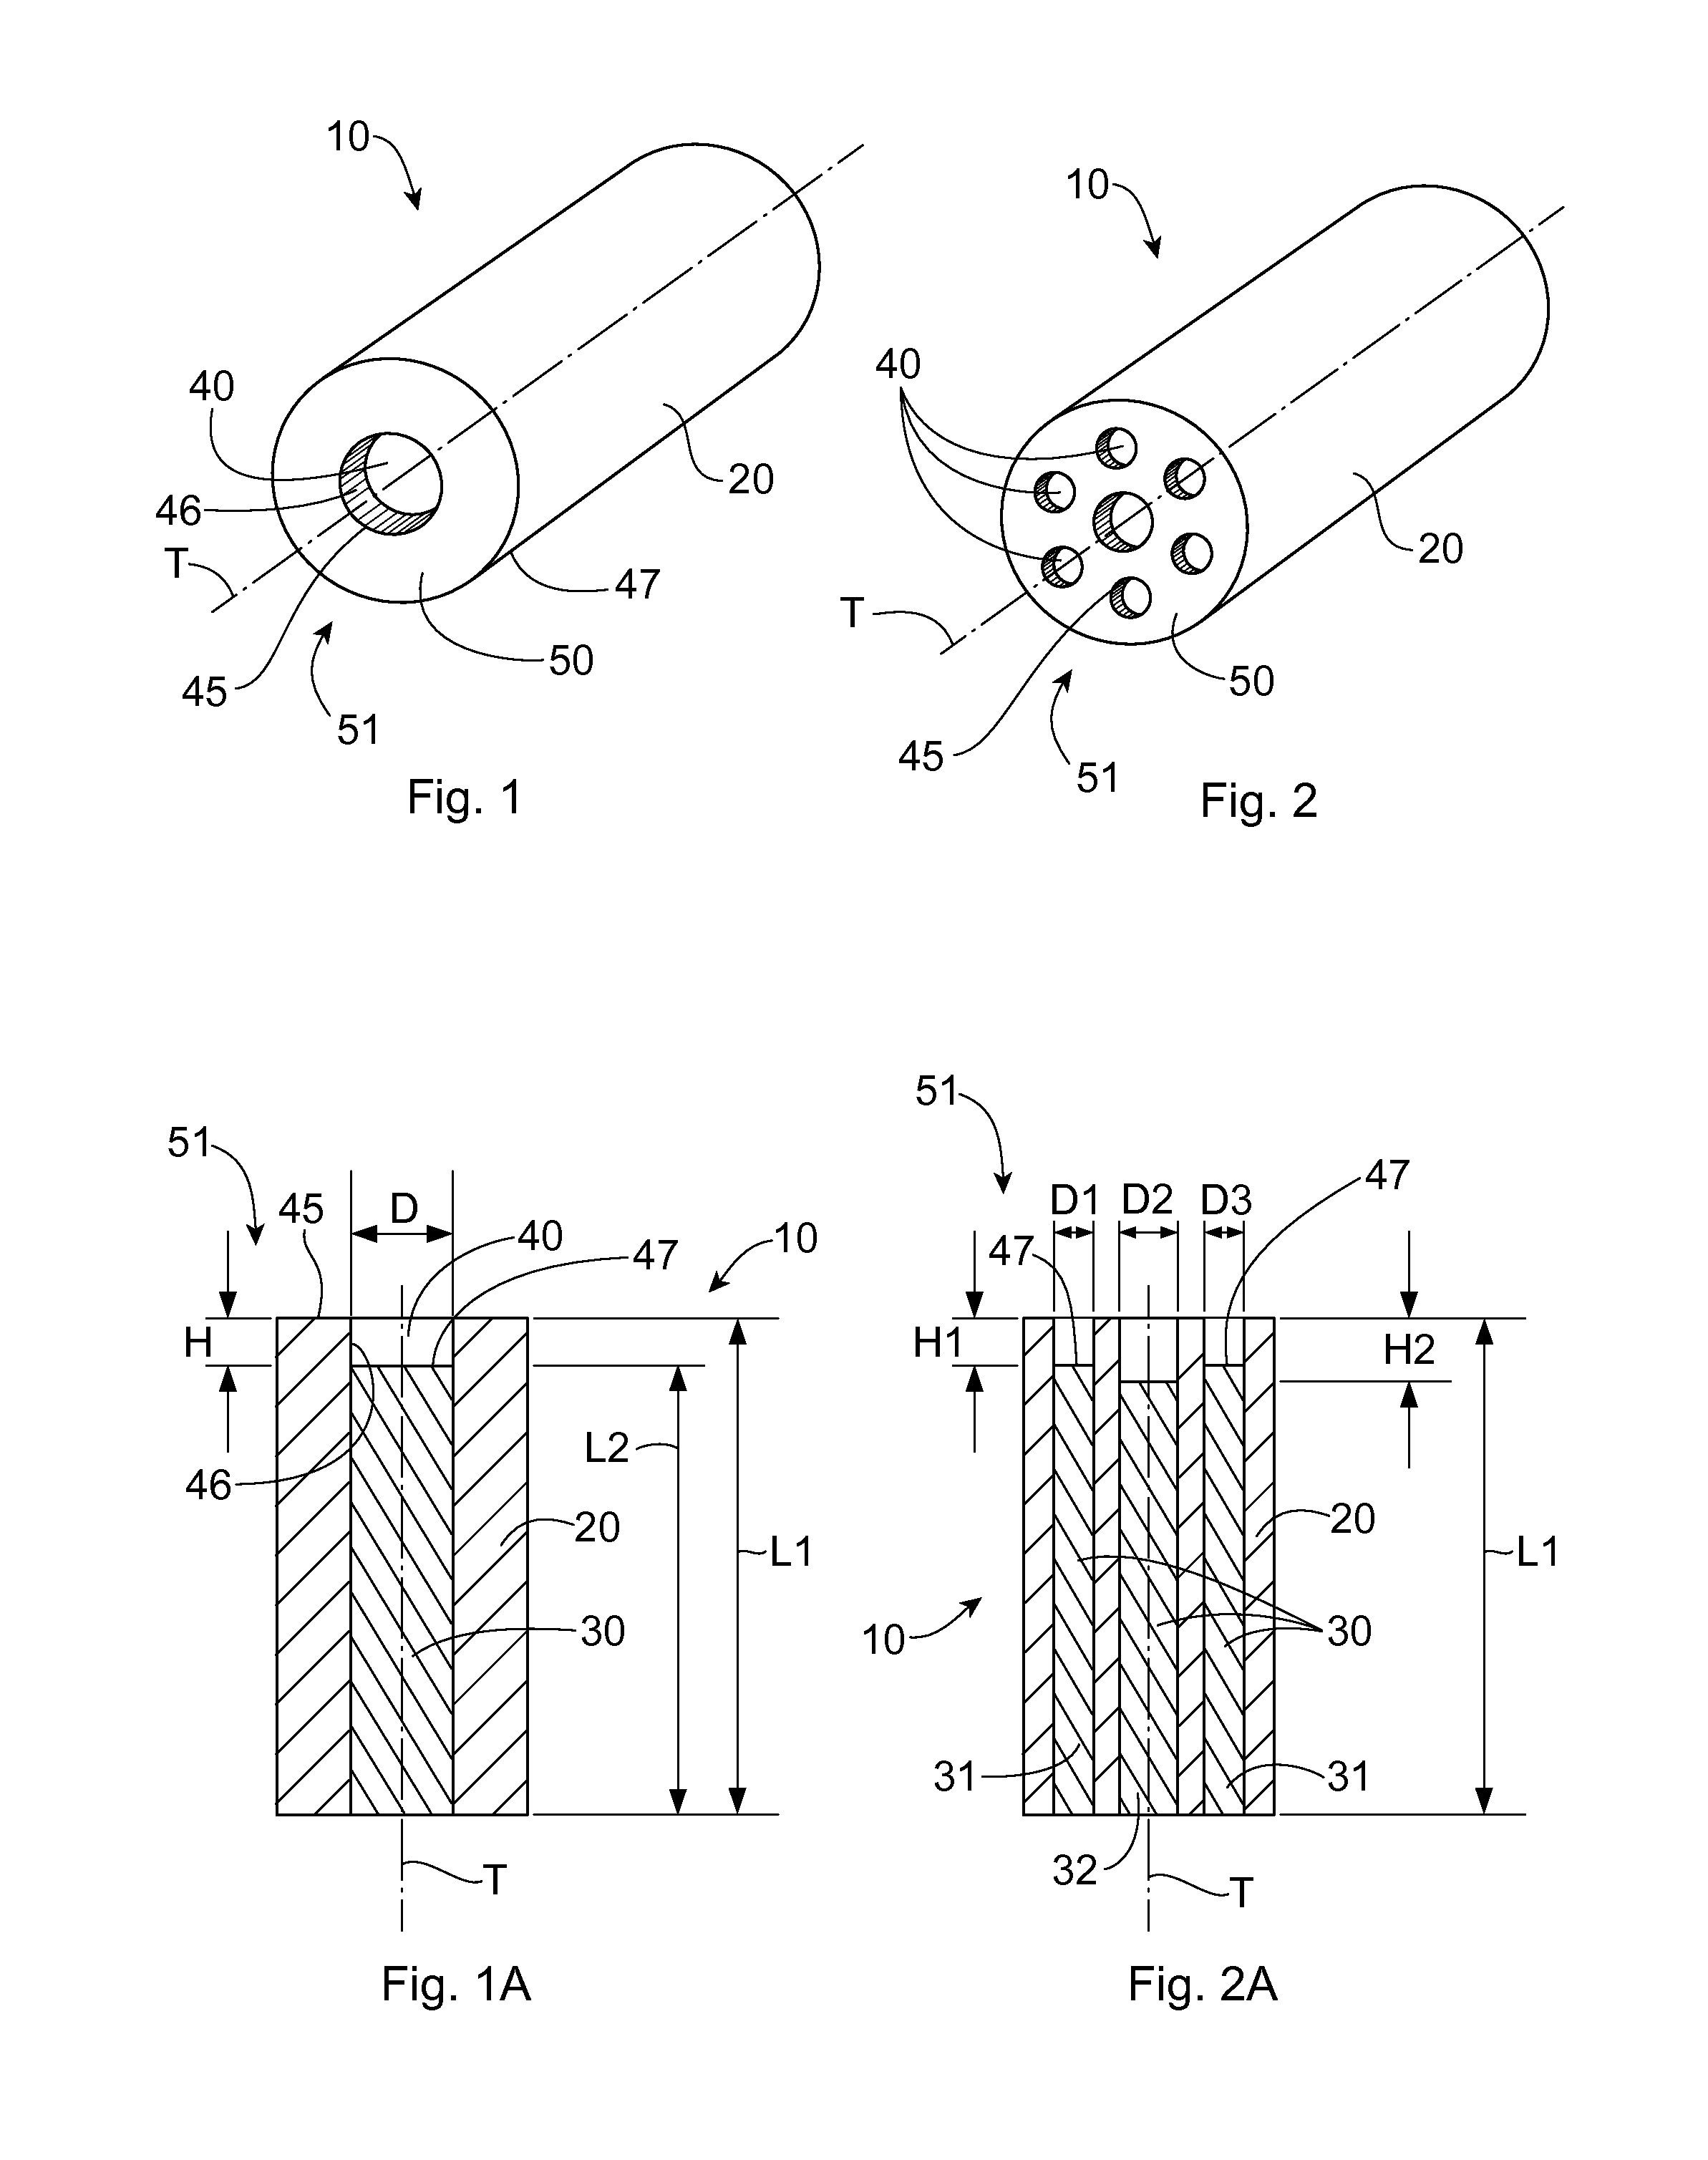 Filament having unique tip and surface characteristics